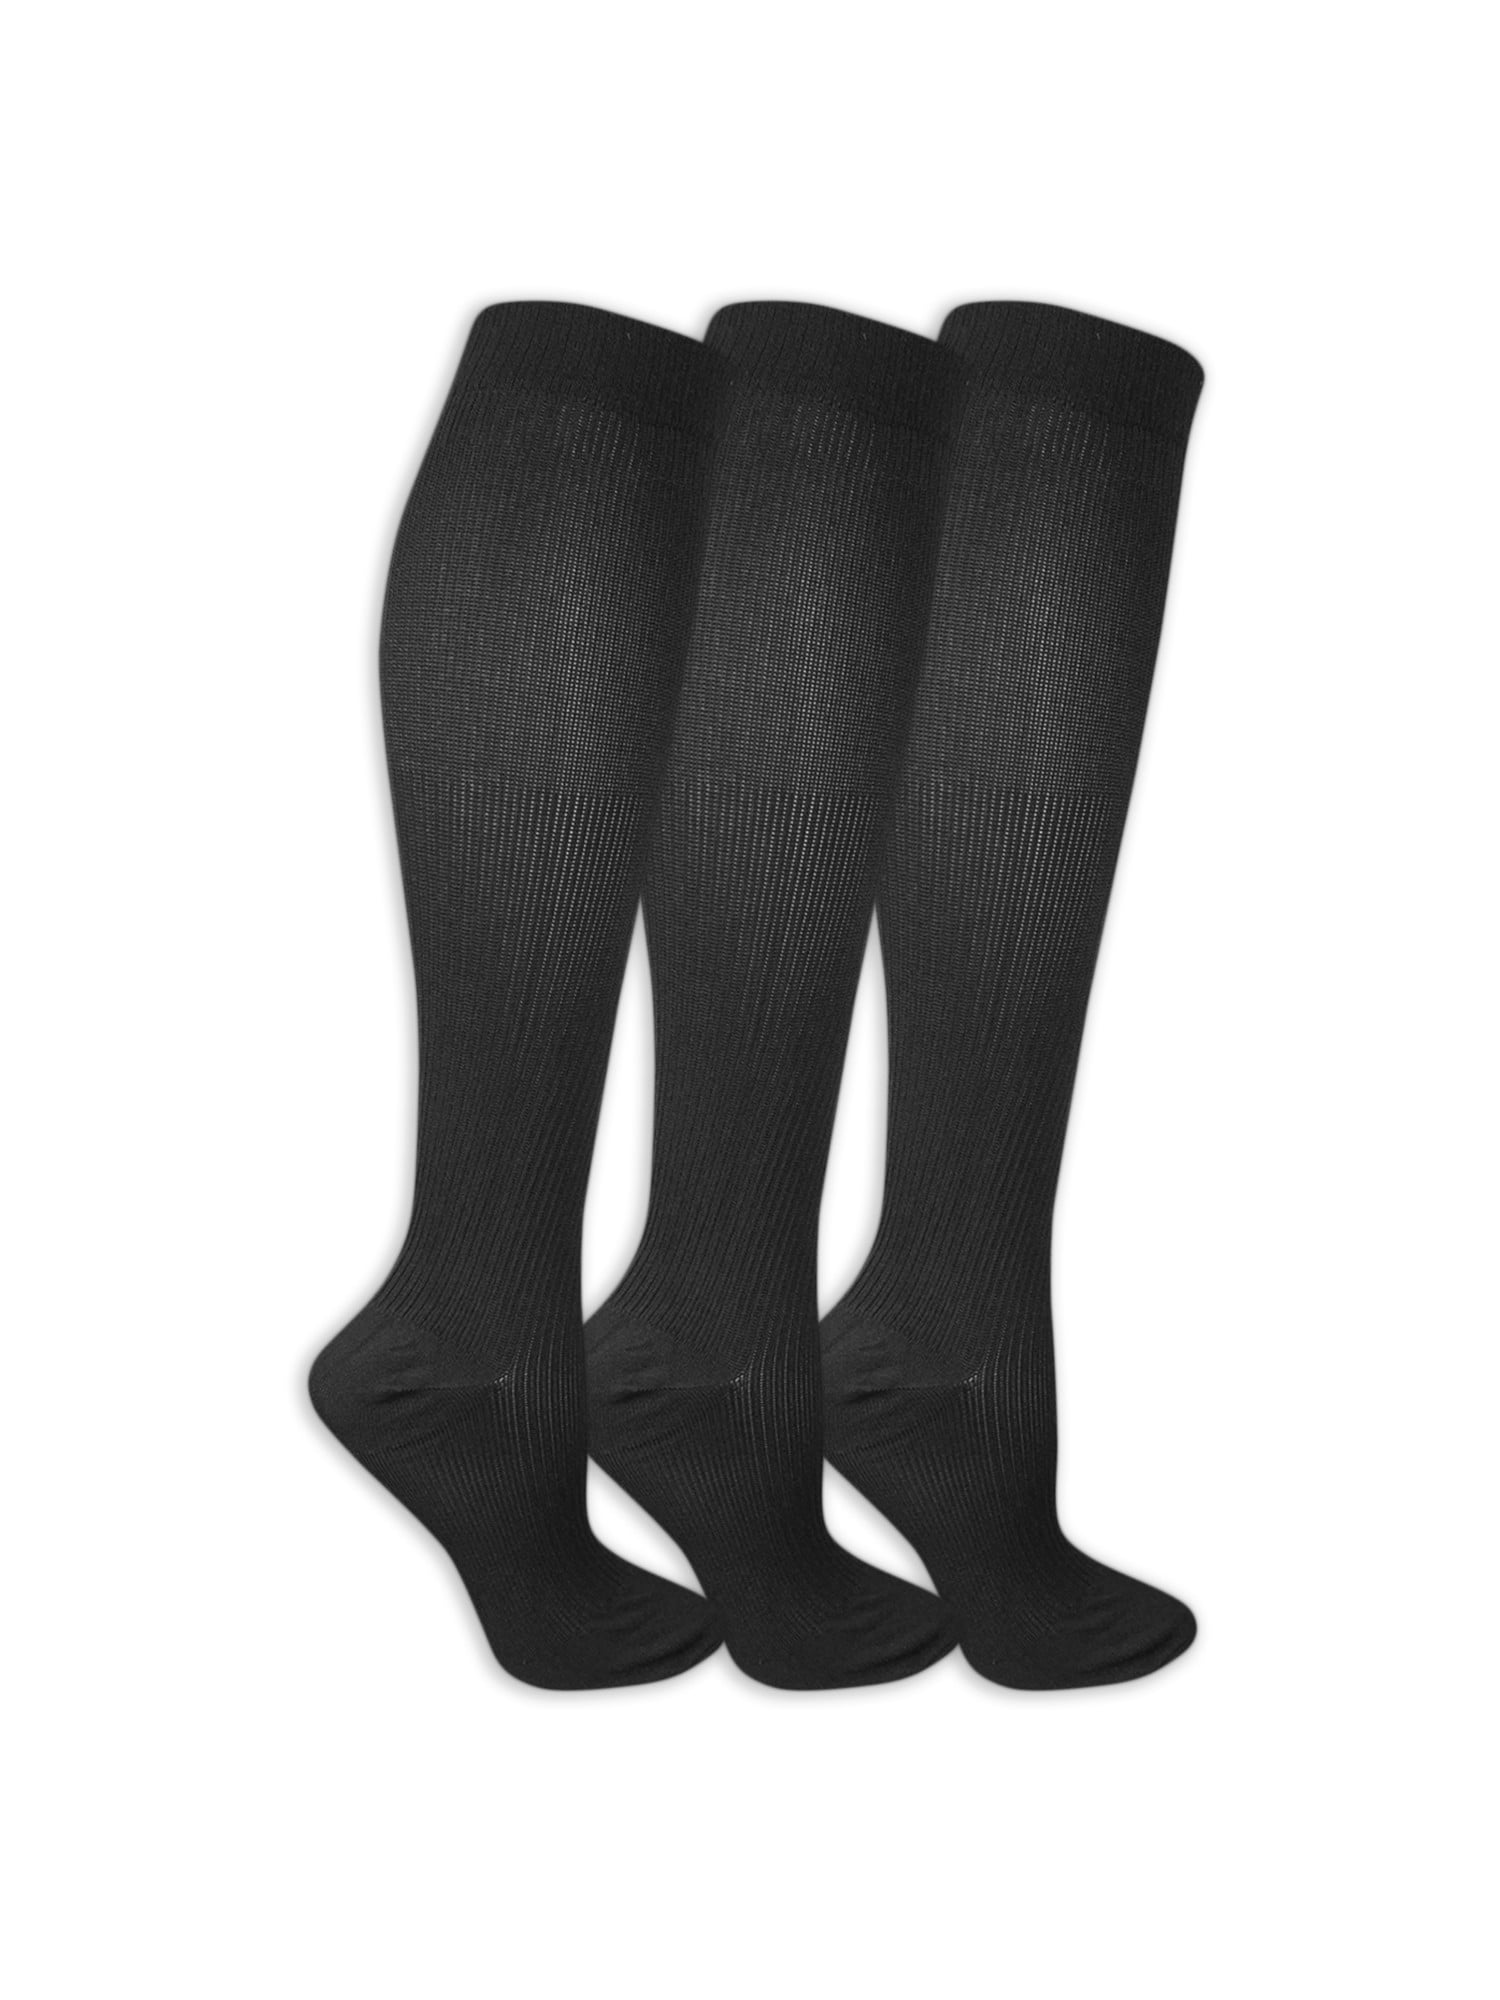 Dr. Scholl's Women's Travel Compression Knee High Socks 3 Pack 